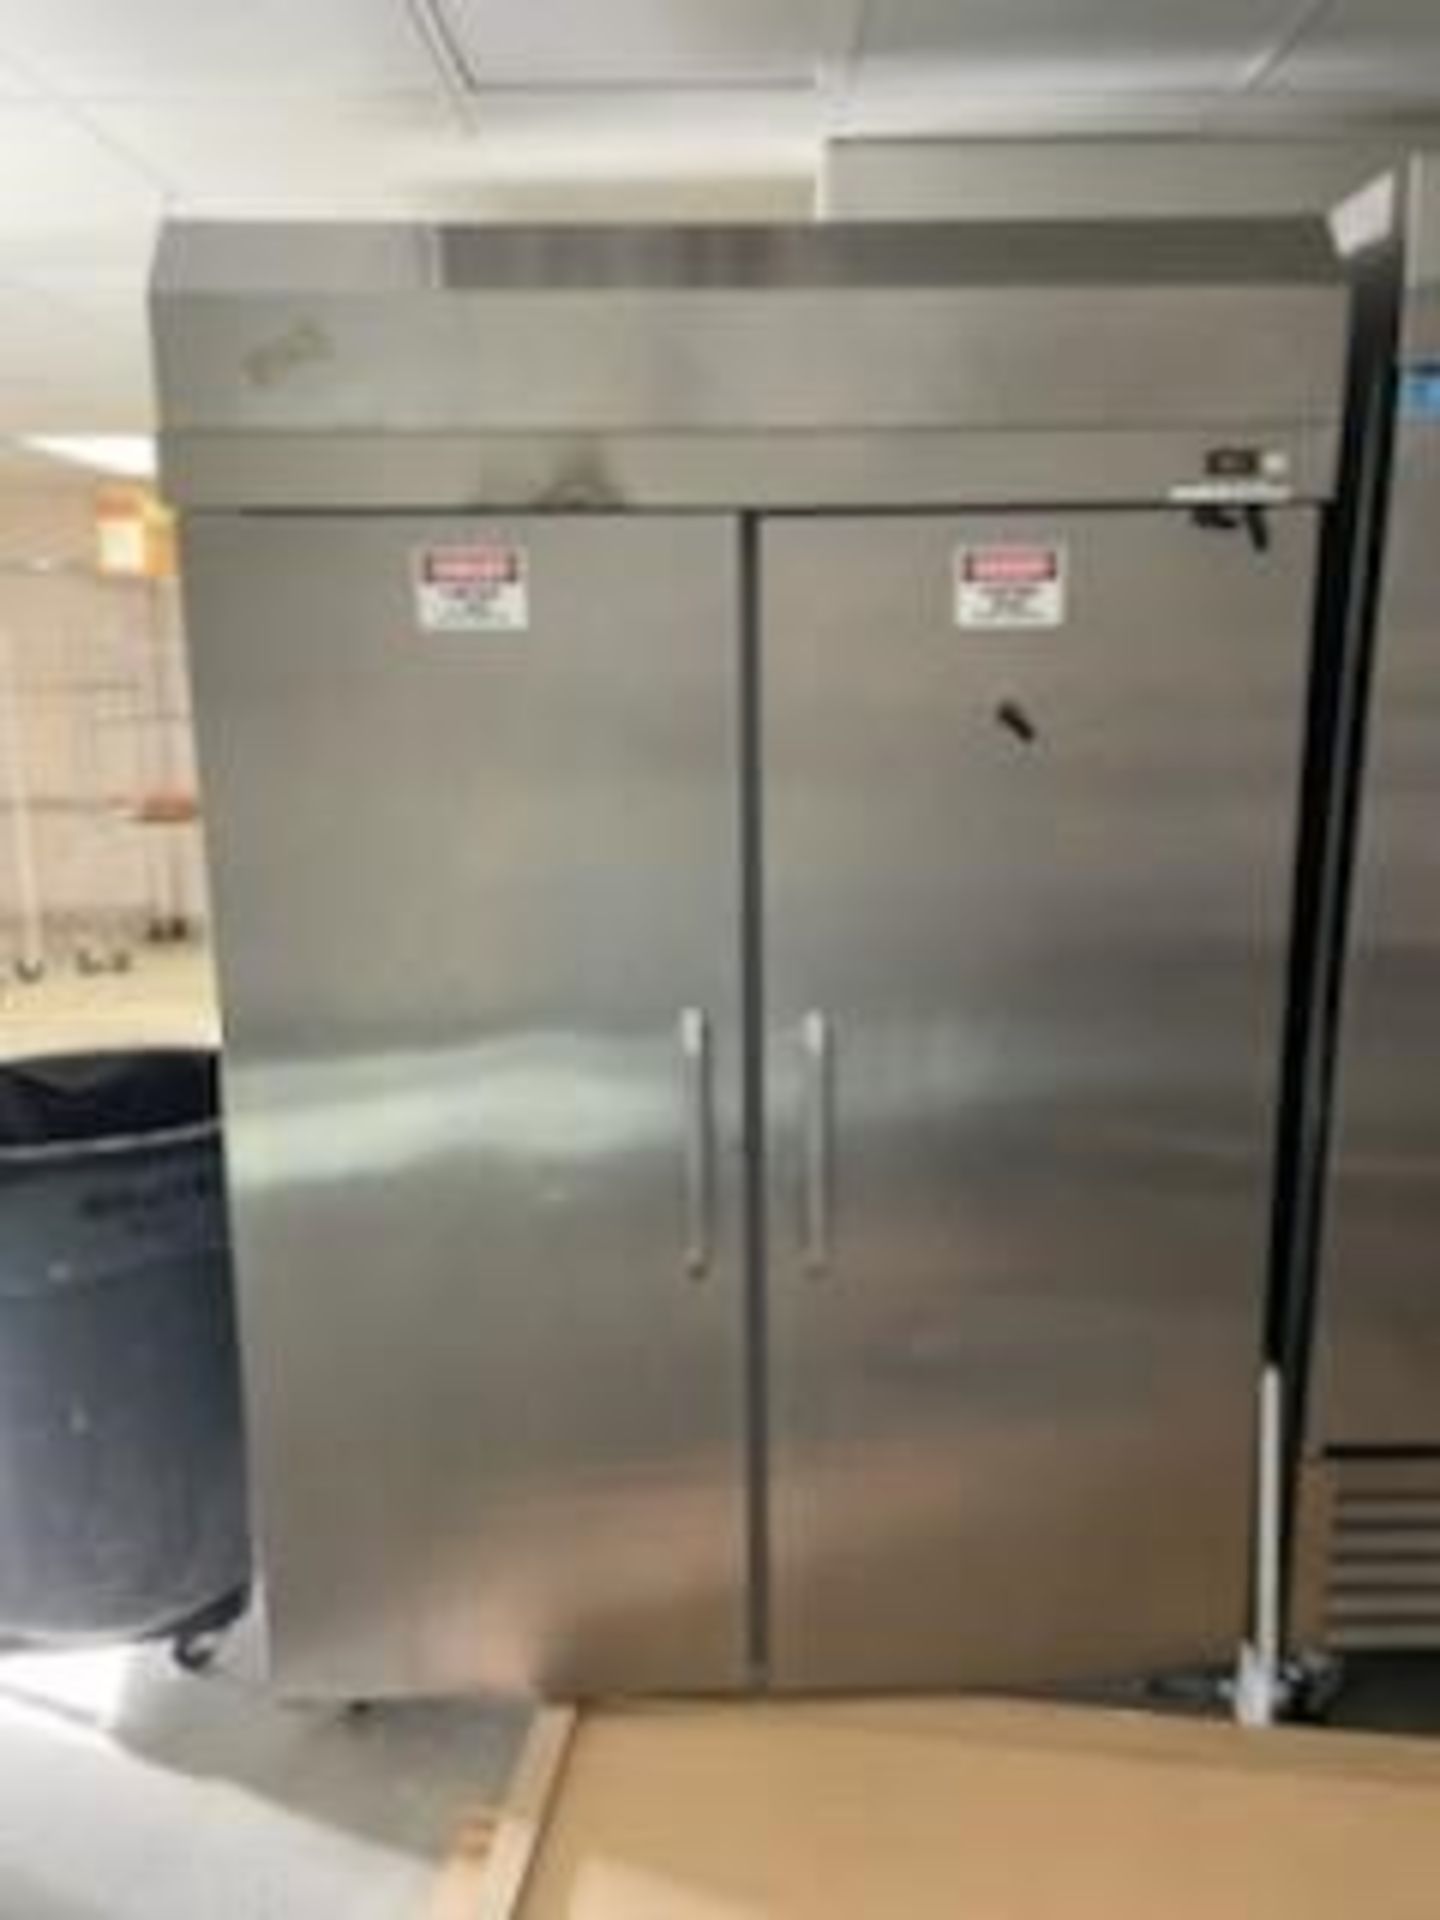 Hobart 2-Door S/S Refrigerator, Model: DA2, SN: 32100323 - Rigging Fee: $75